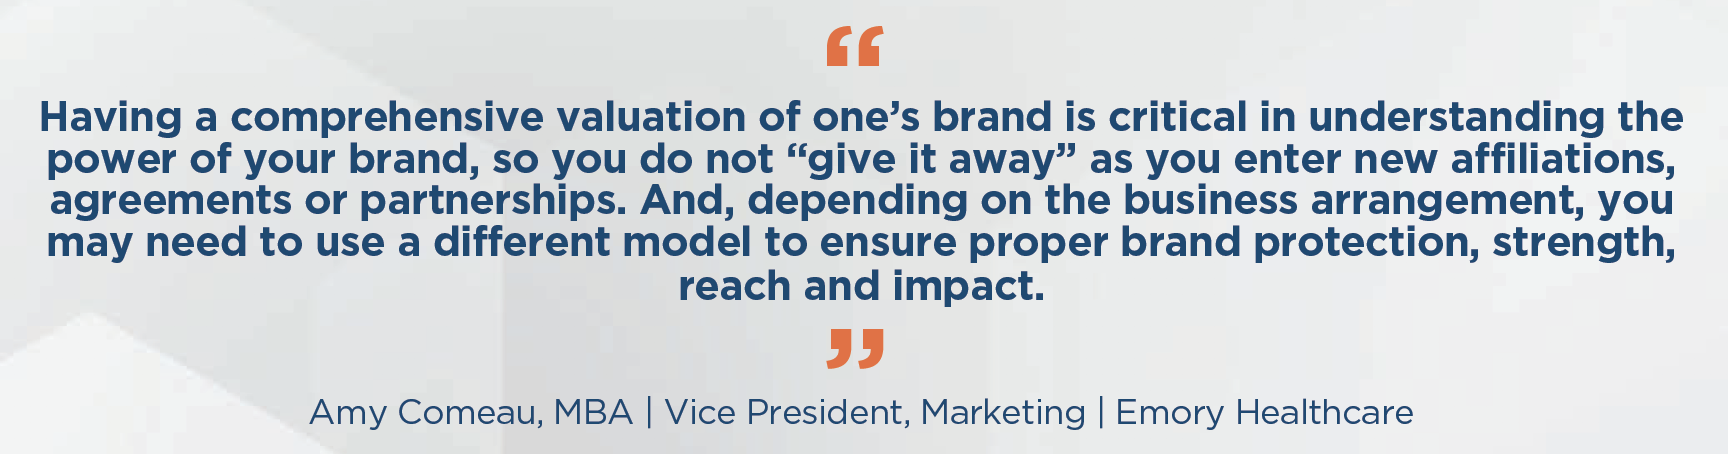 value of branding quote